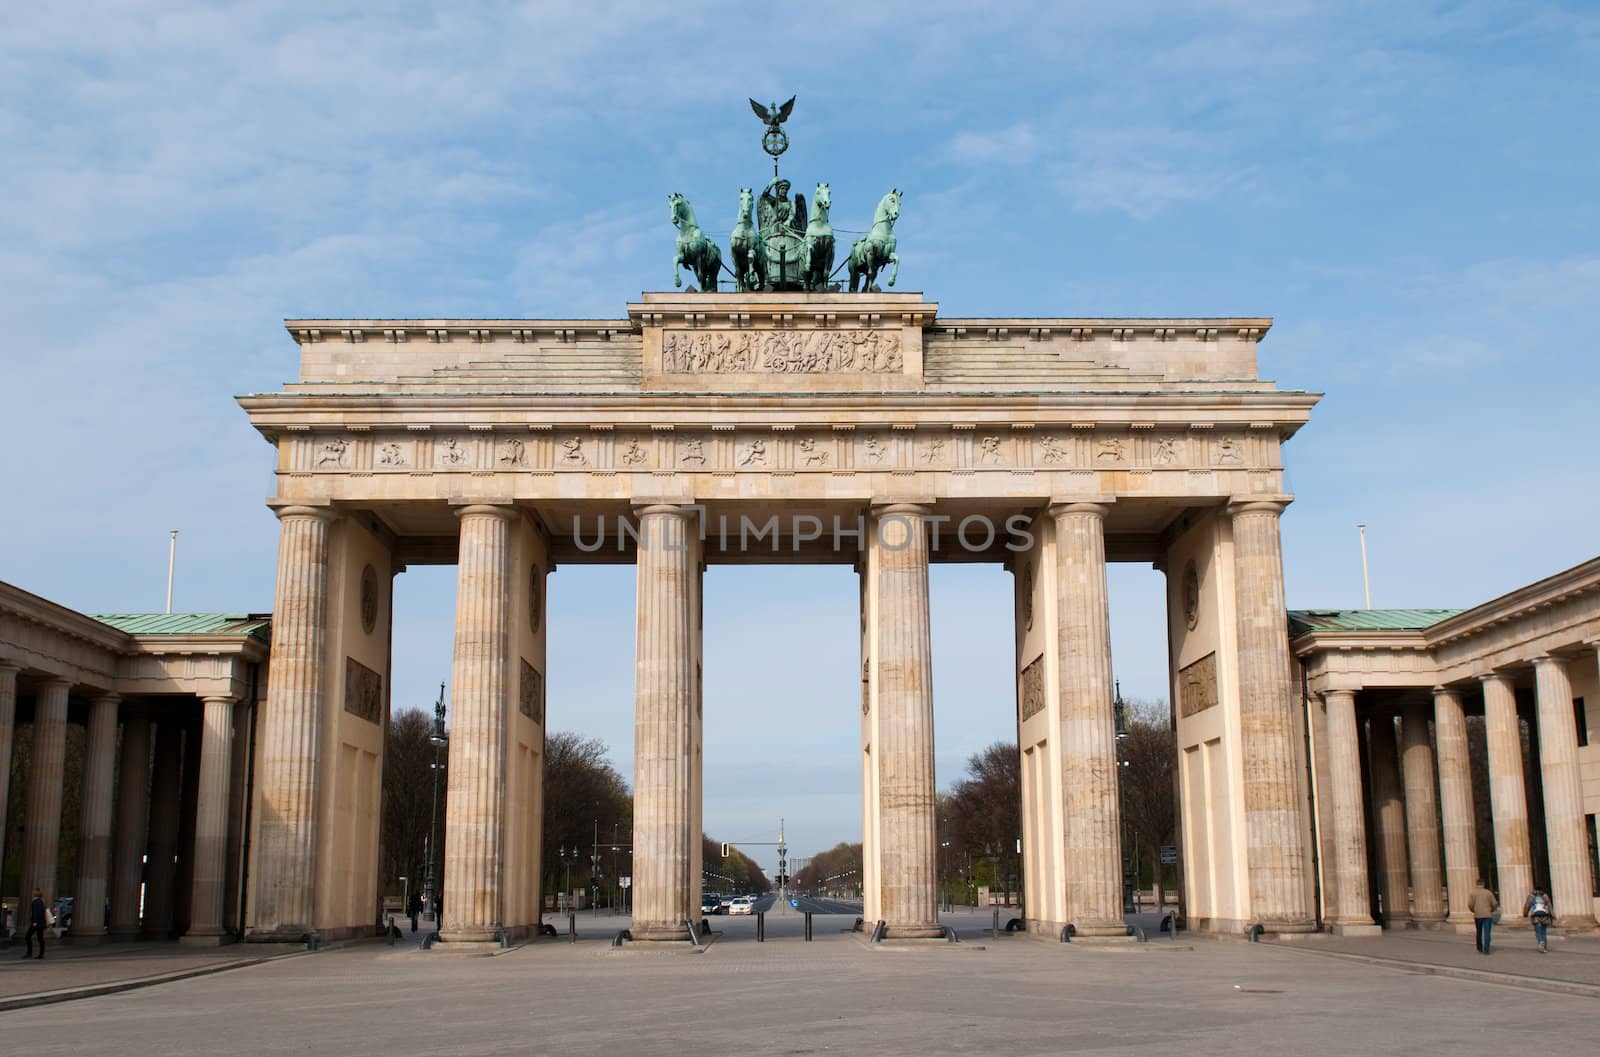 The Brandenburger Tor (Brandenburg Gate) is the ancient gateway to Berlin, Germany